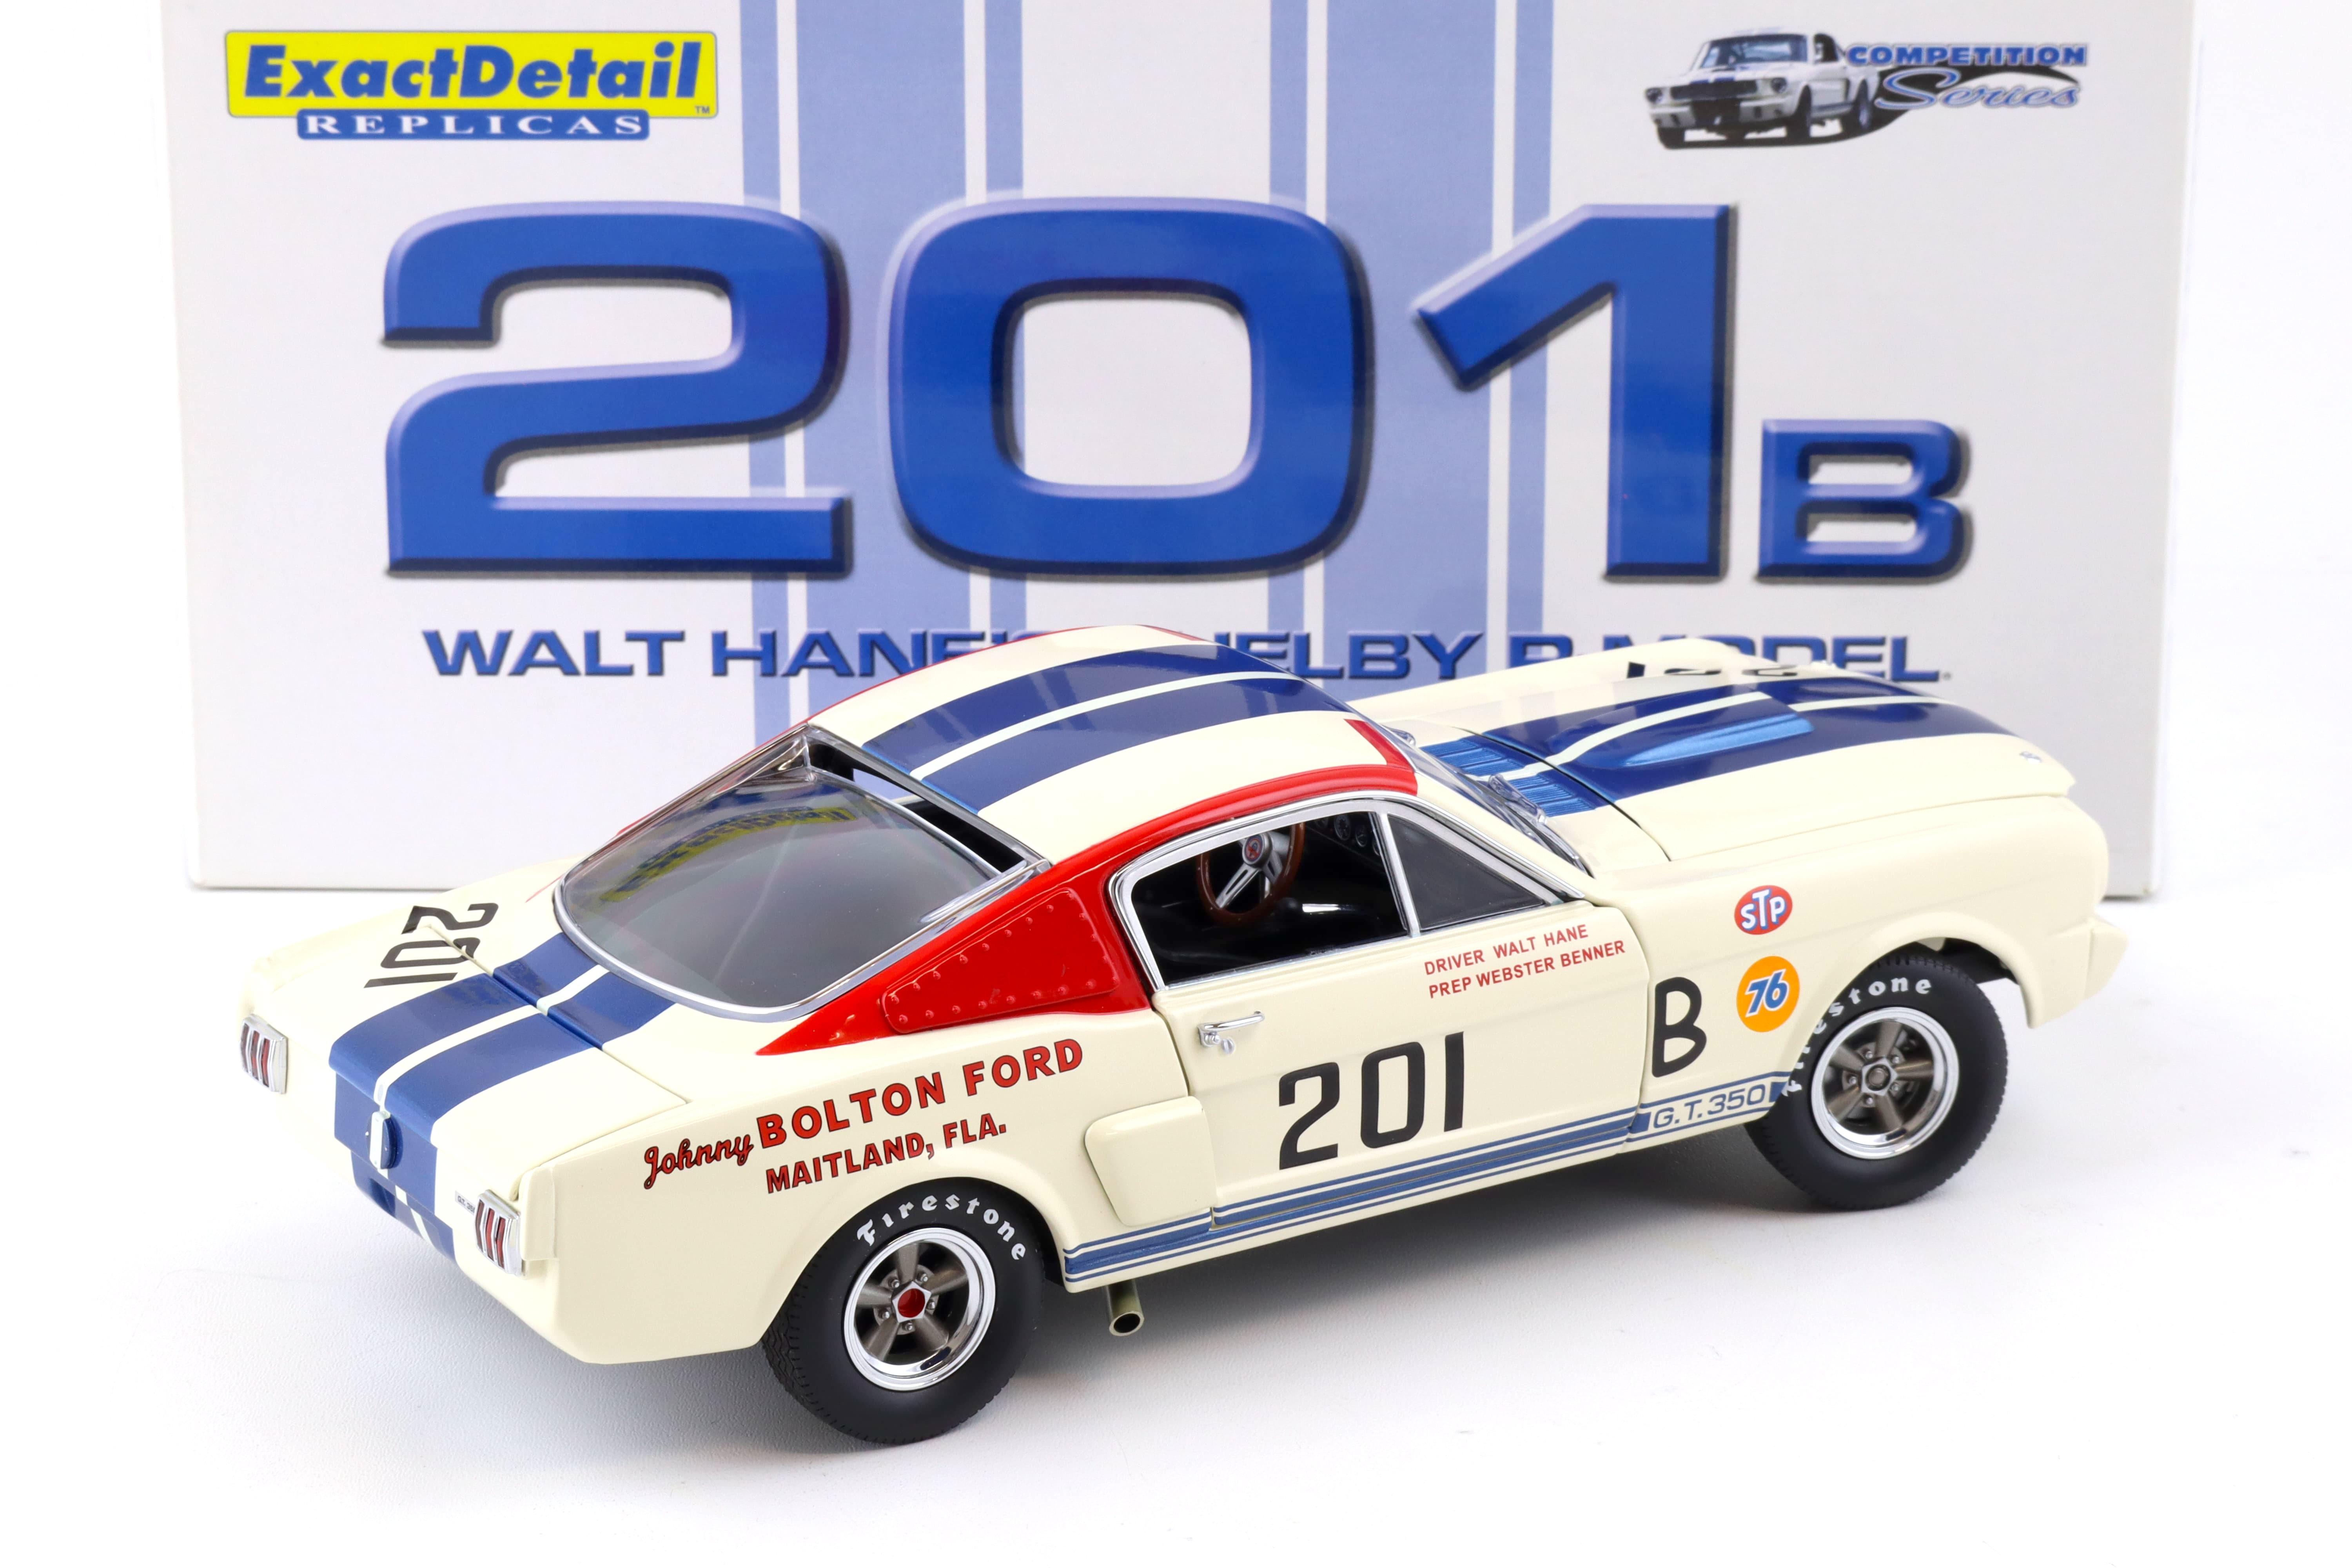 1:18 Exact Detail Shelby GT 350 Walt Hane R-Model #201B white WCC112